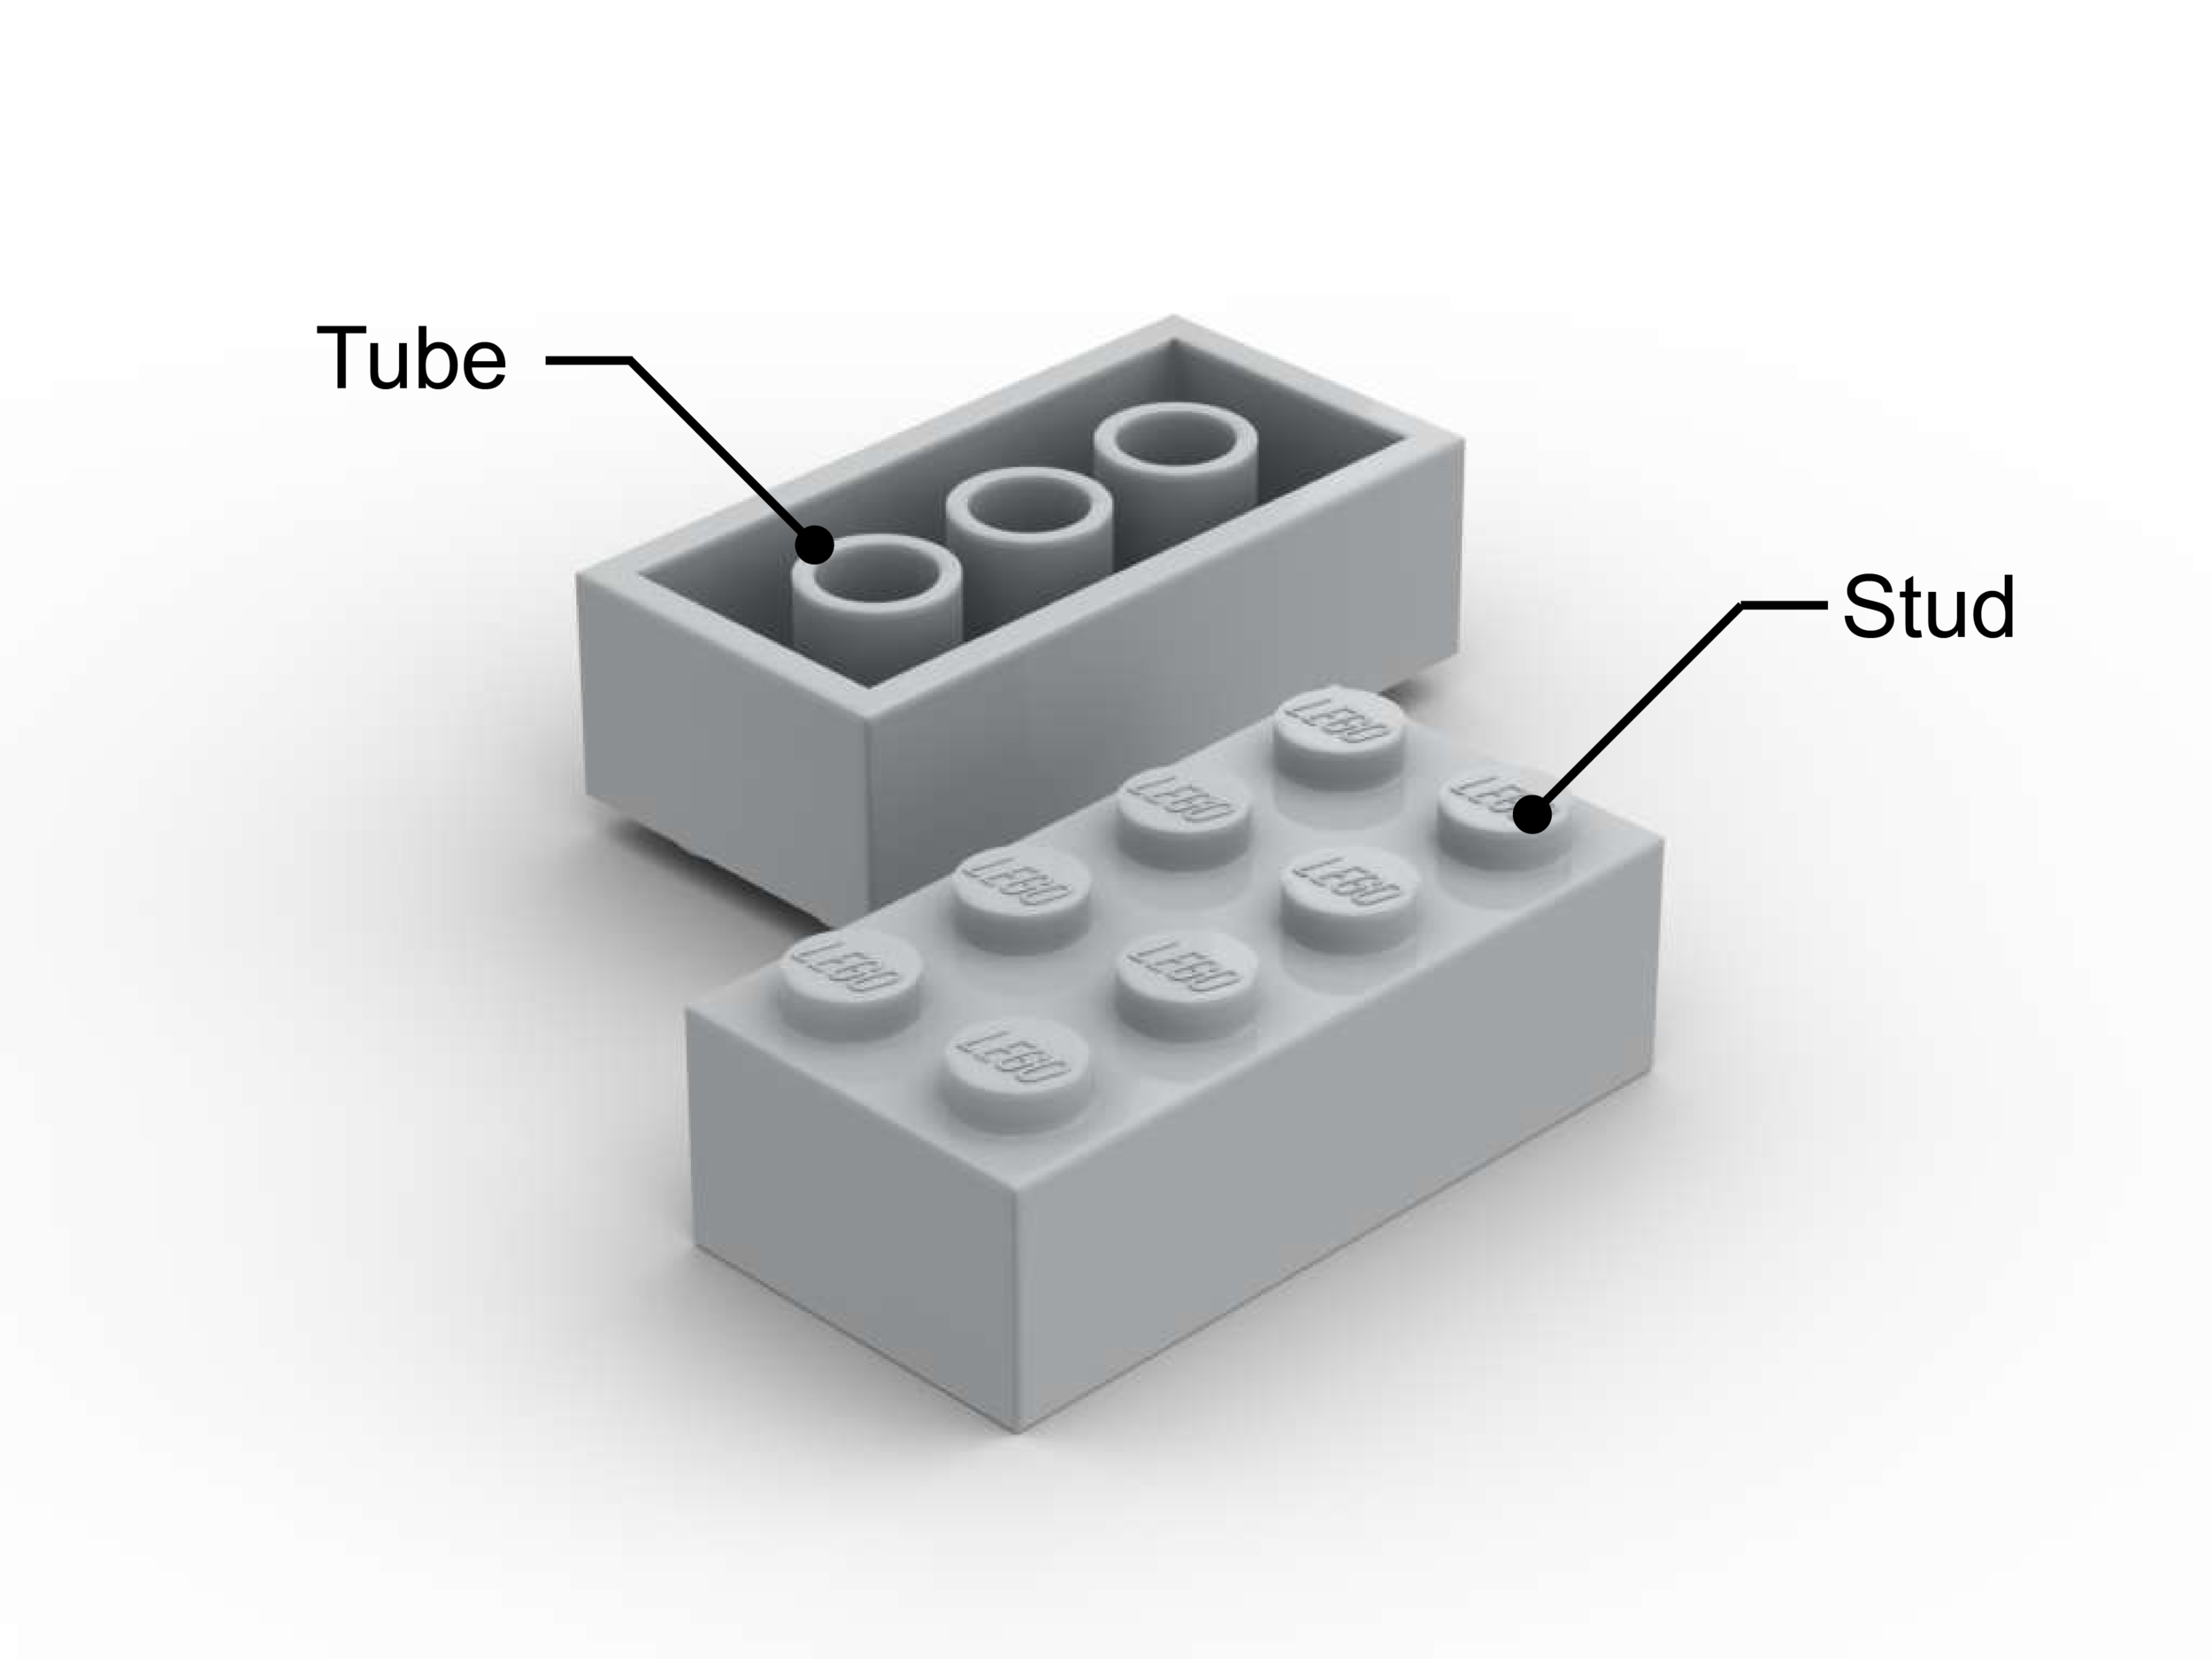 Lego 25 New White Bricks 1 x 12 Stud Building Blocks Pieces